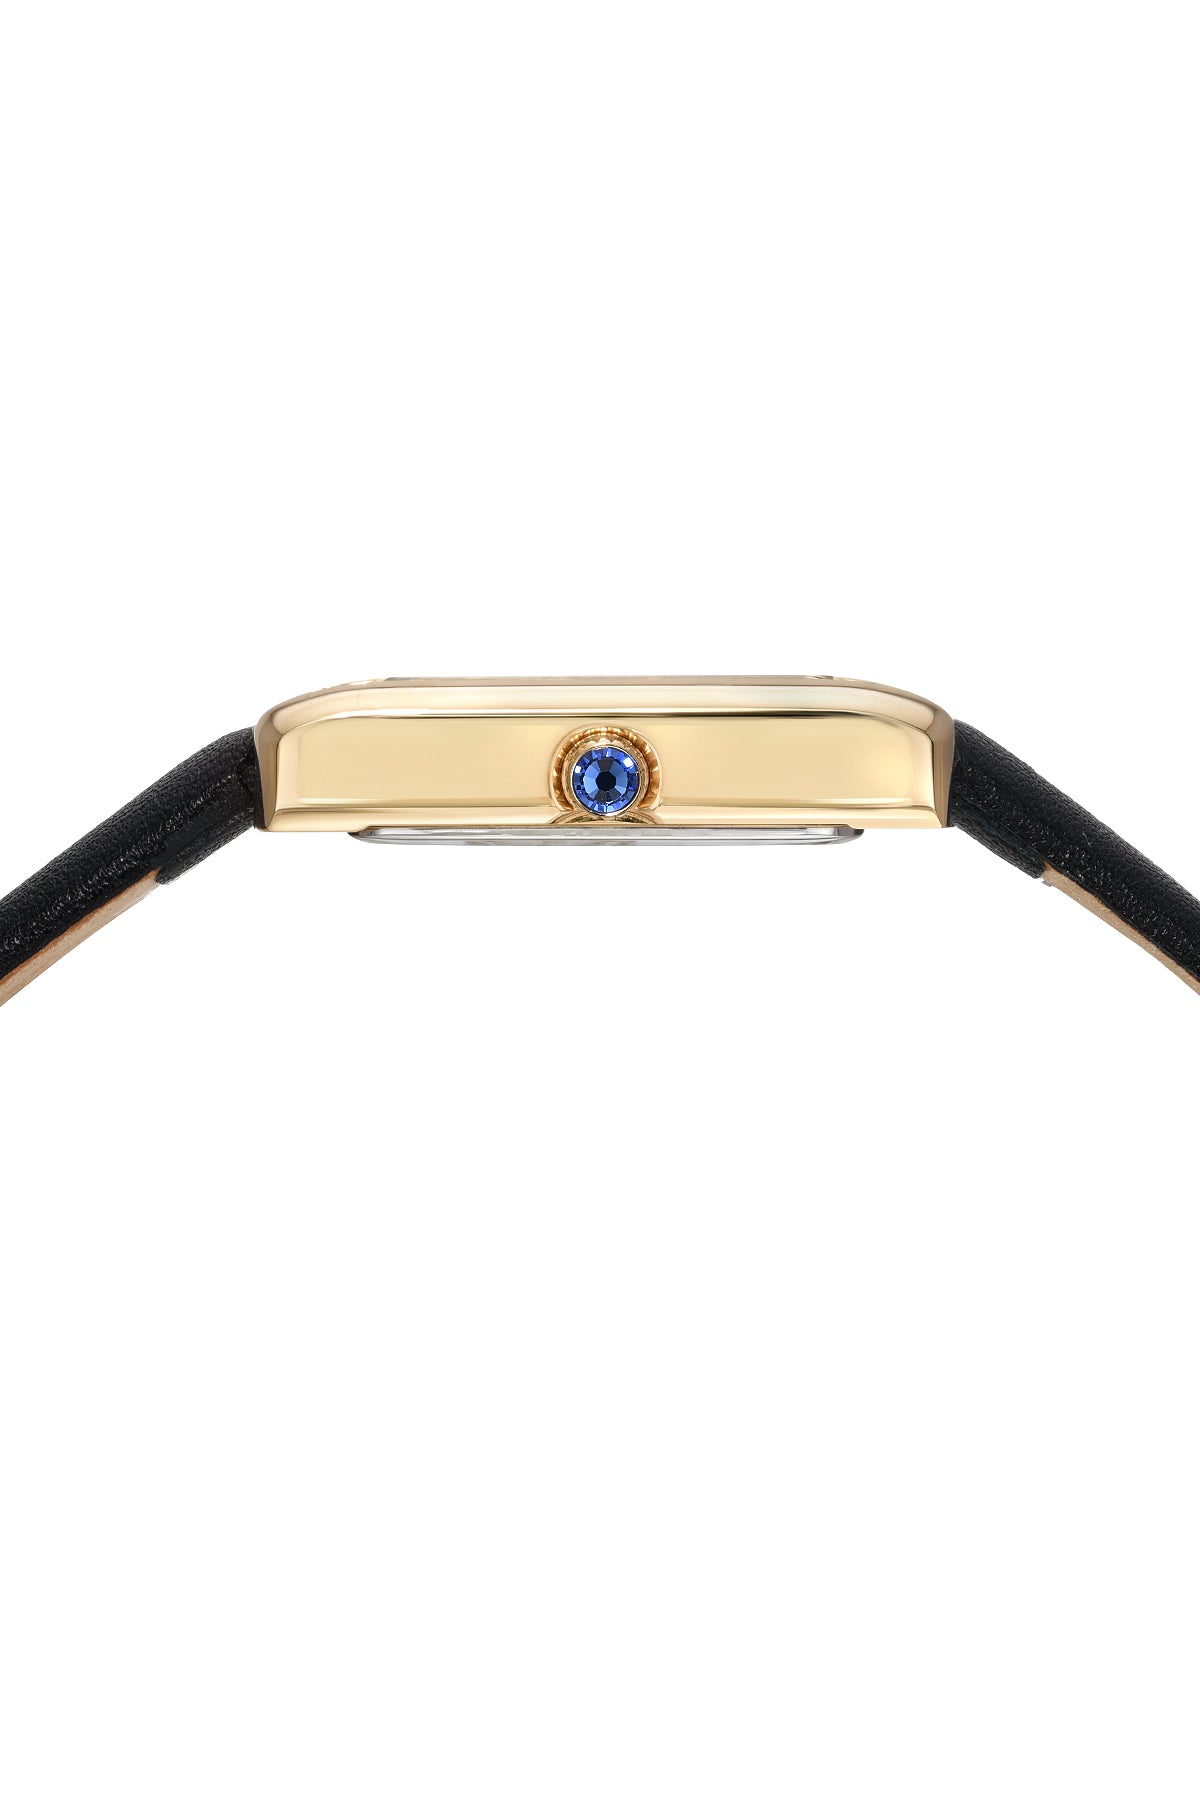 Porsamo Bleu Karolina Luxury Diamond Rectangular Women's Genuine Leather Band Watch, Gold, Black 1082AKAL